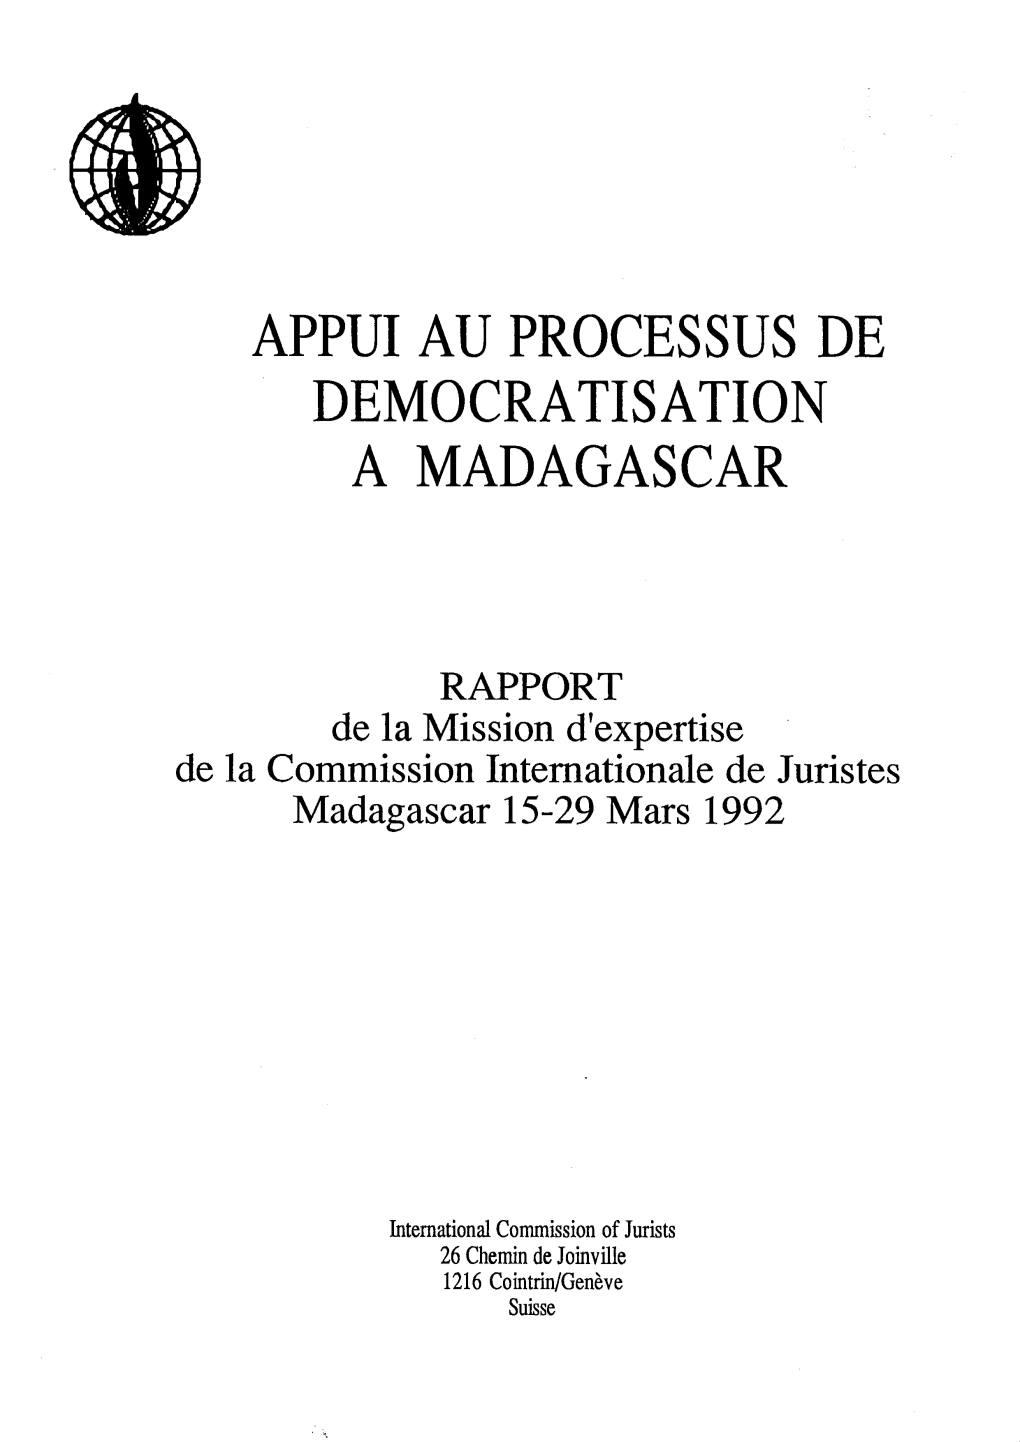 Appui Au Processus De Democratisation a Madagascar